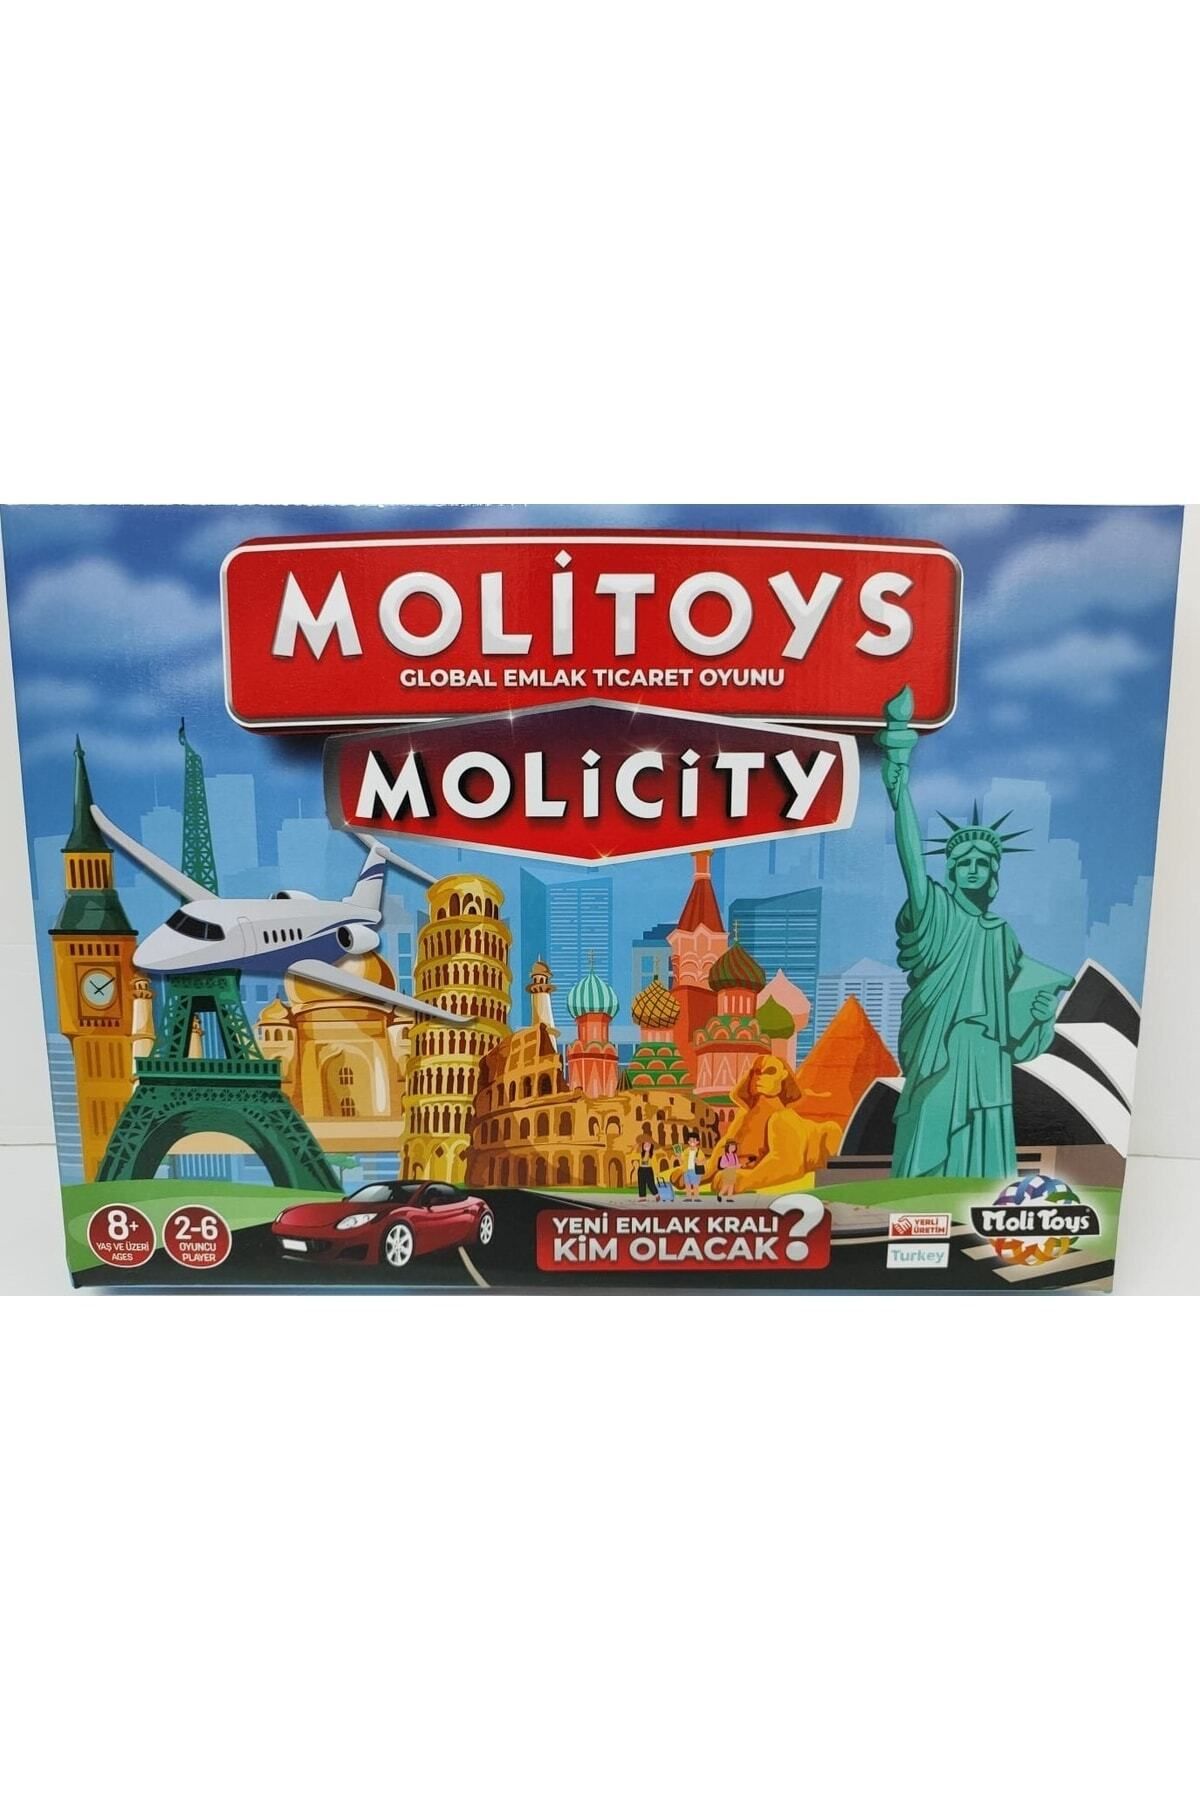 Moli Toys Emlak Ticaret Oyunu Molipoly Molicity Monopoly Monopoli Metropol Mega City Aile Oyunu Yeni Model